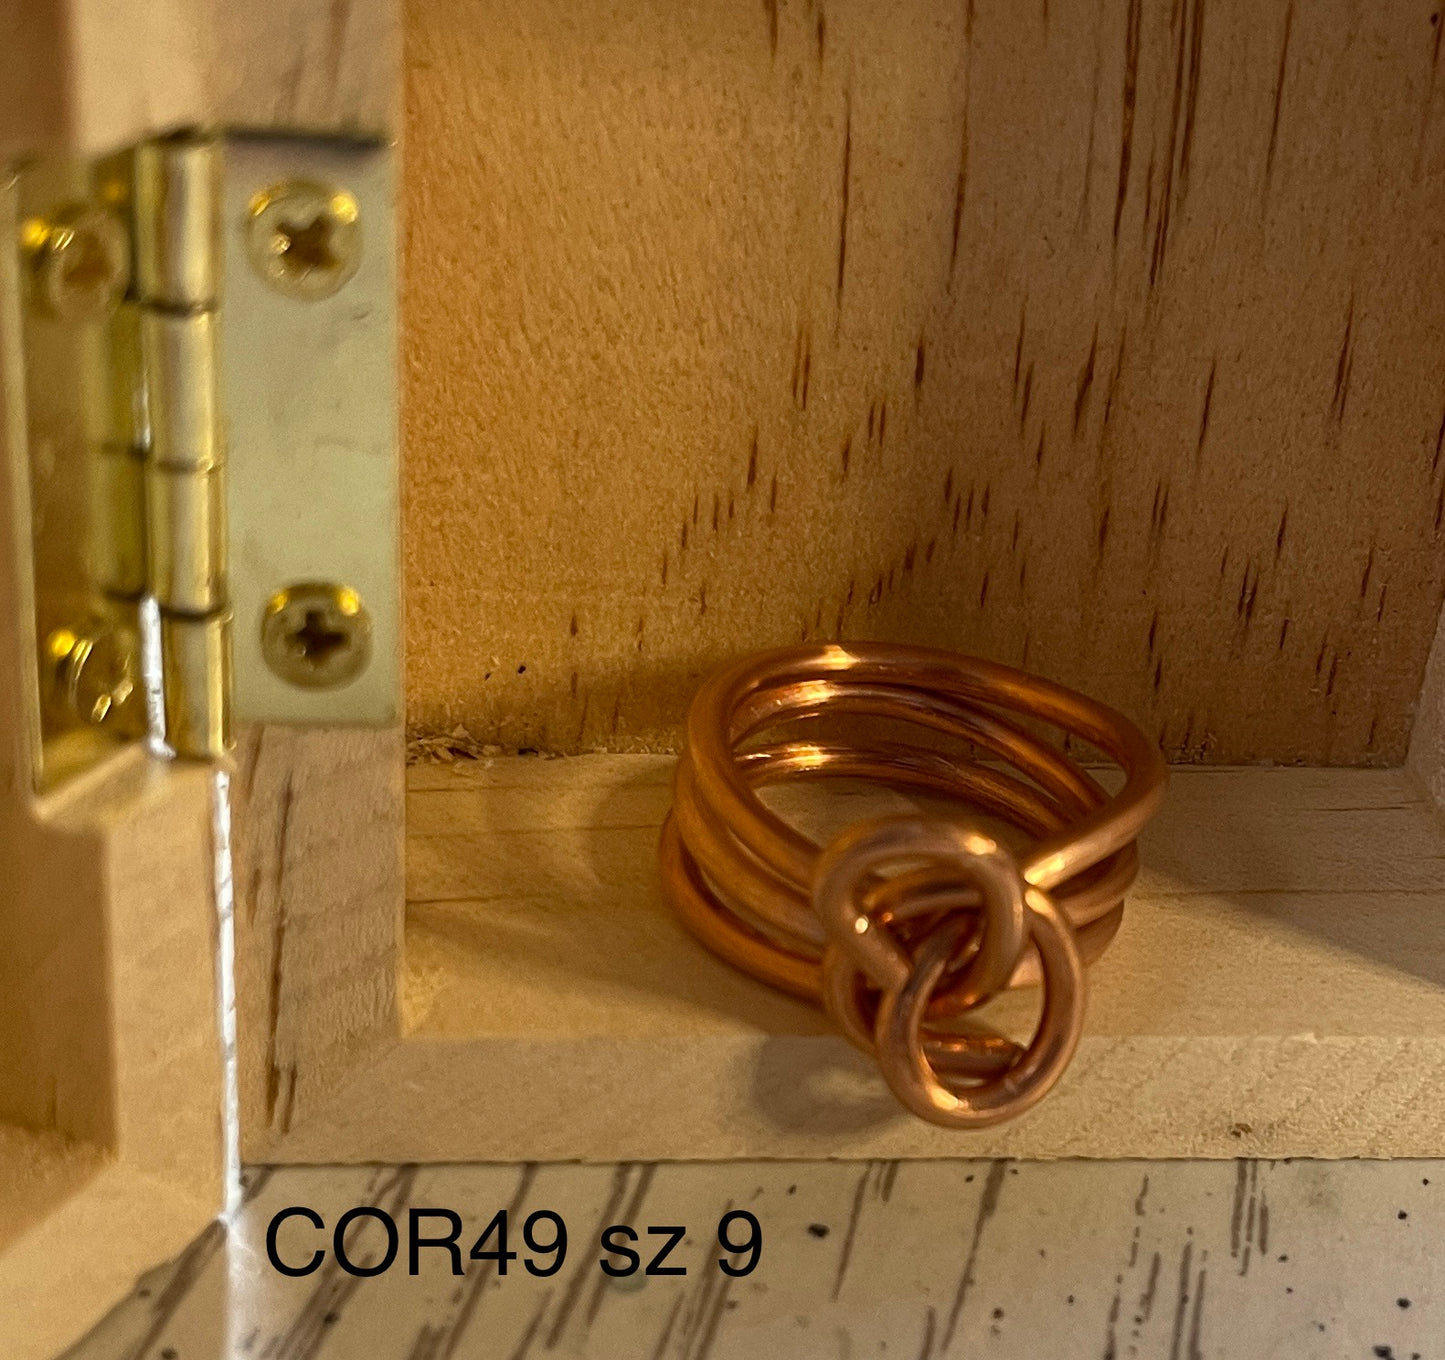 Think Copper Ring COR49 sz 9